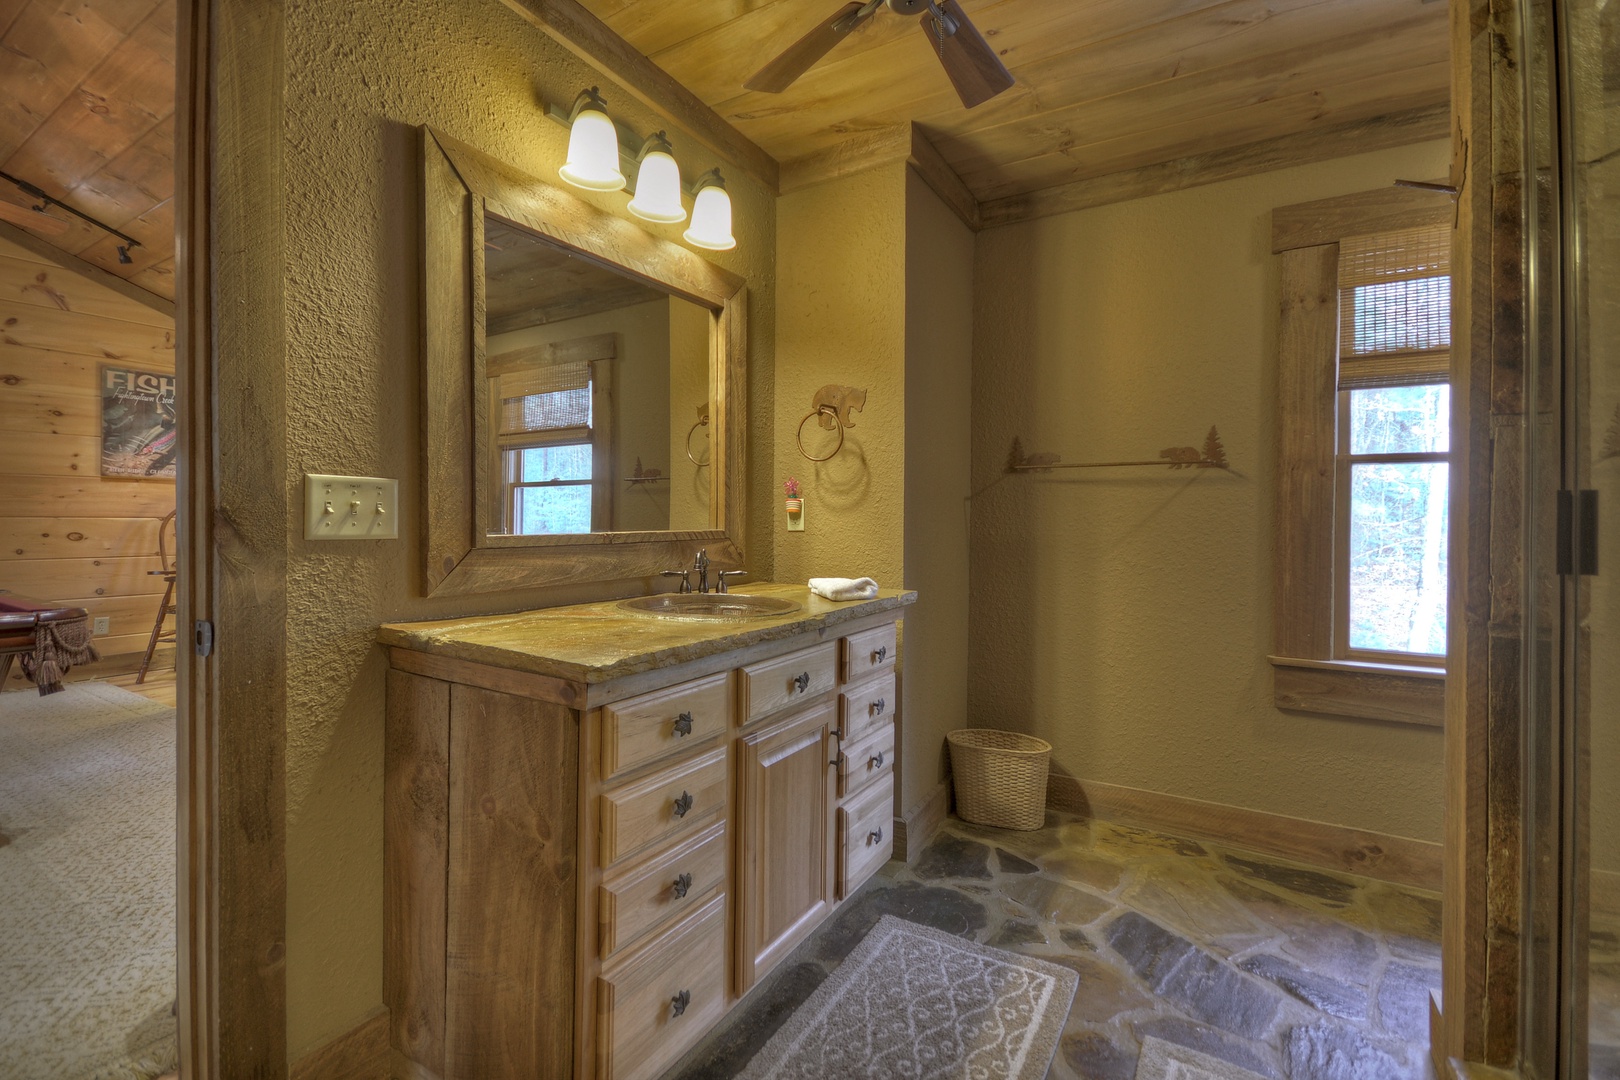 Reel Creek Lodge- Private bathroom view of the vanity sink and mirror